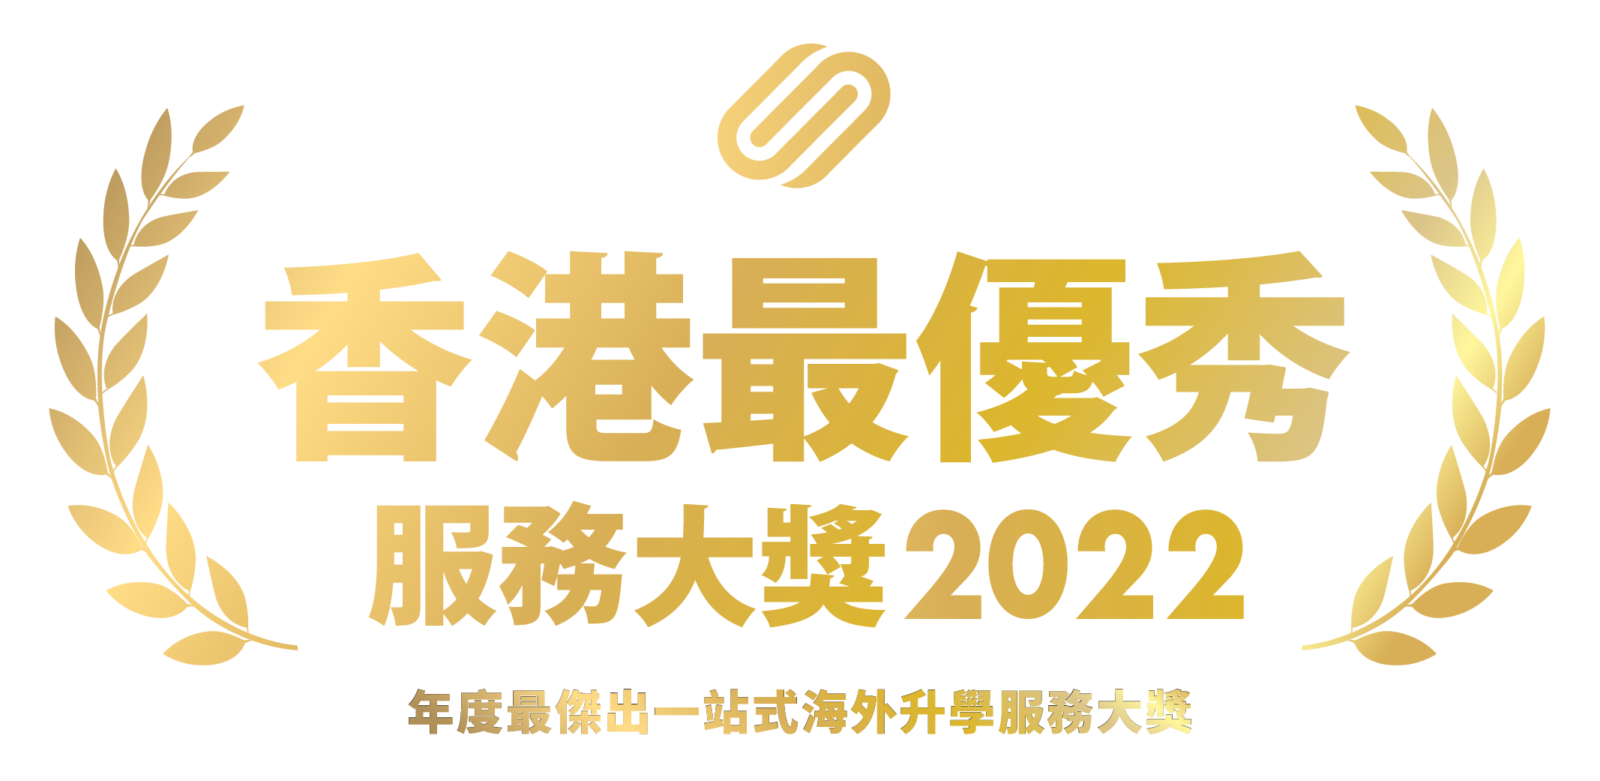 HKMOS_2022_Australian Education Association_Chinese_-01